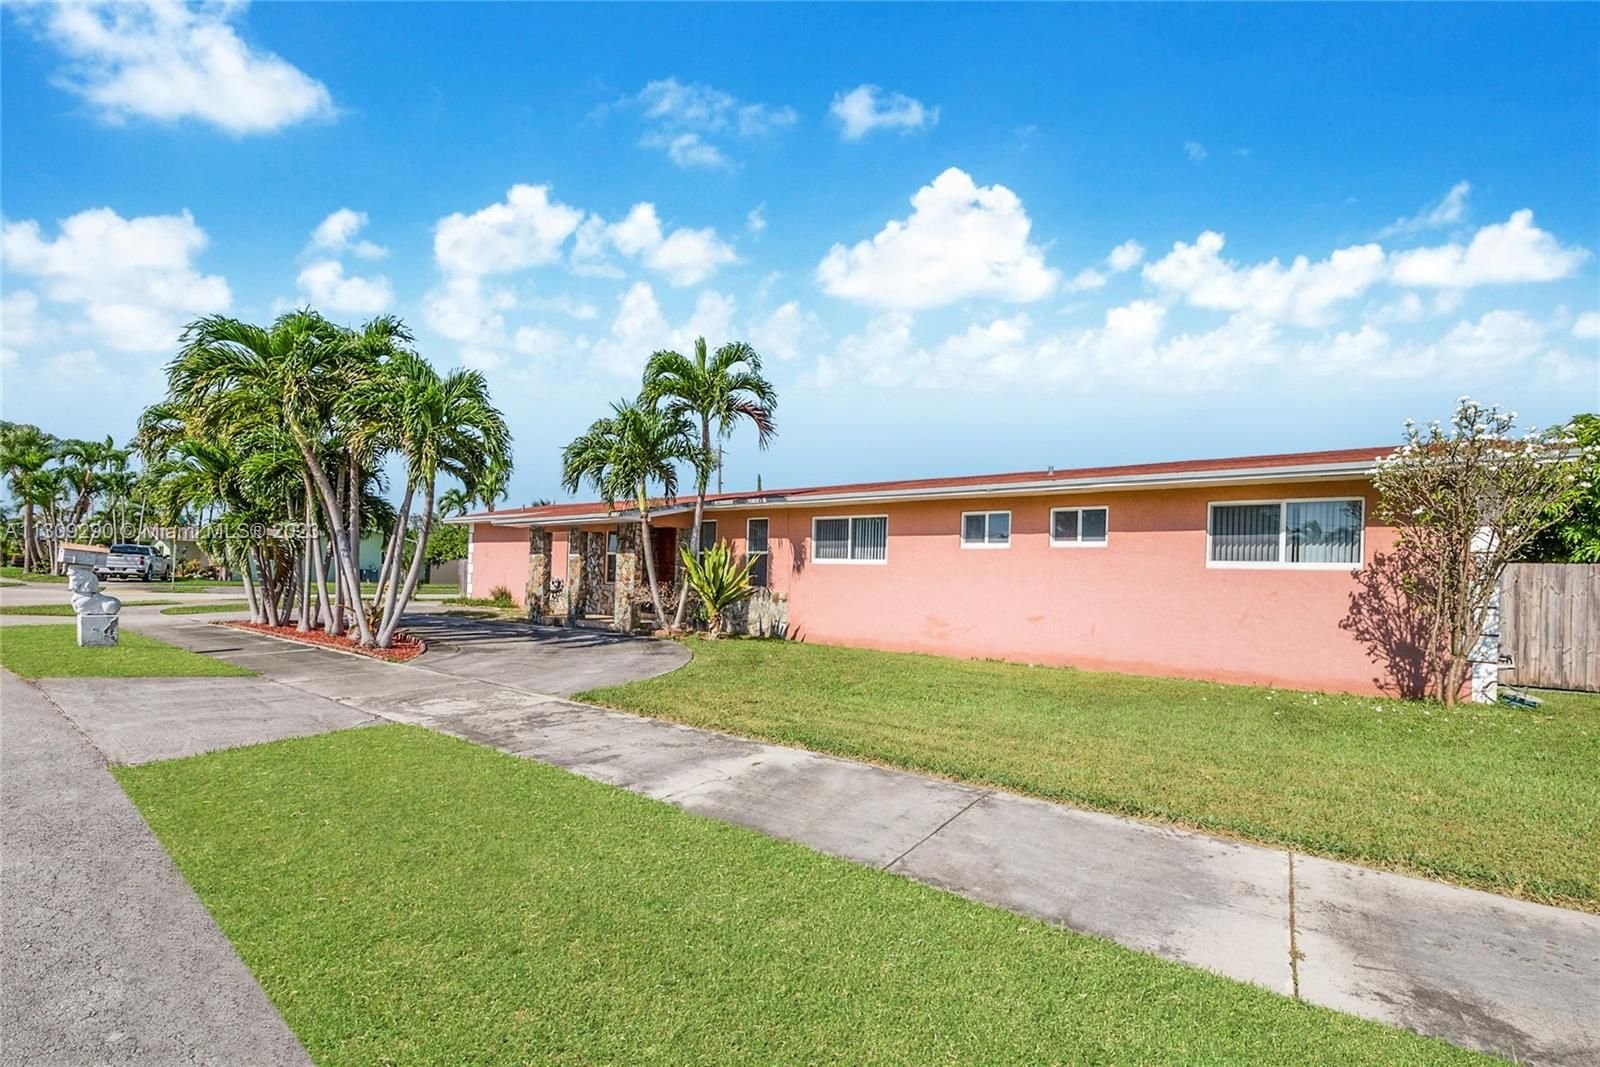 Real estate property located at 9525 44 St, Miami-Dade County, Miami, FL